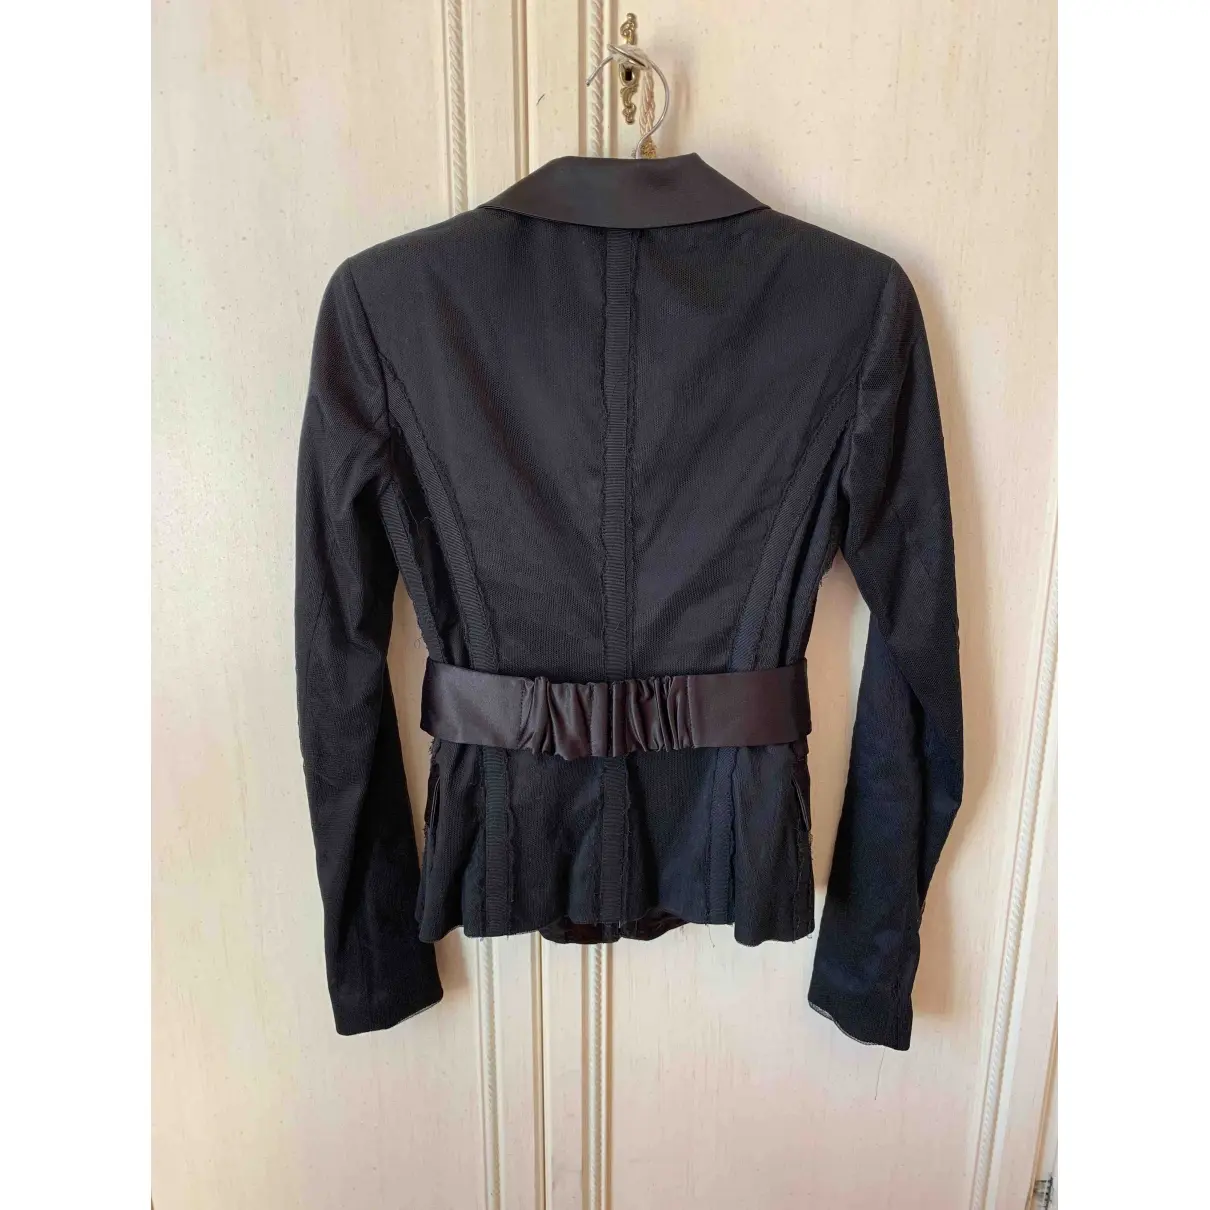 Buy Elisabetta Franchi Black Polyester Jacket online